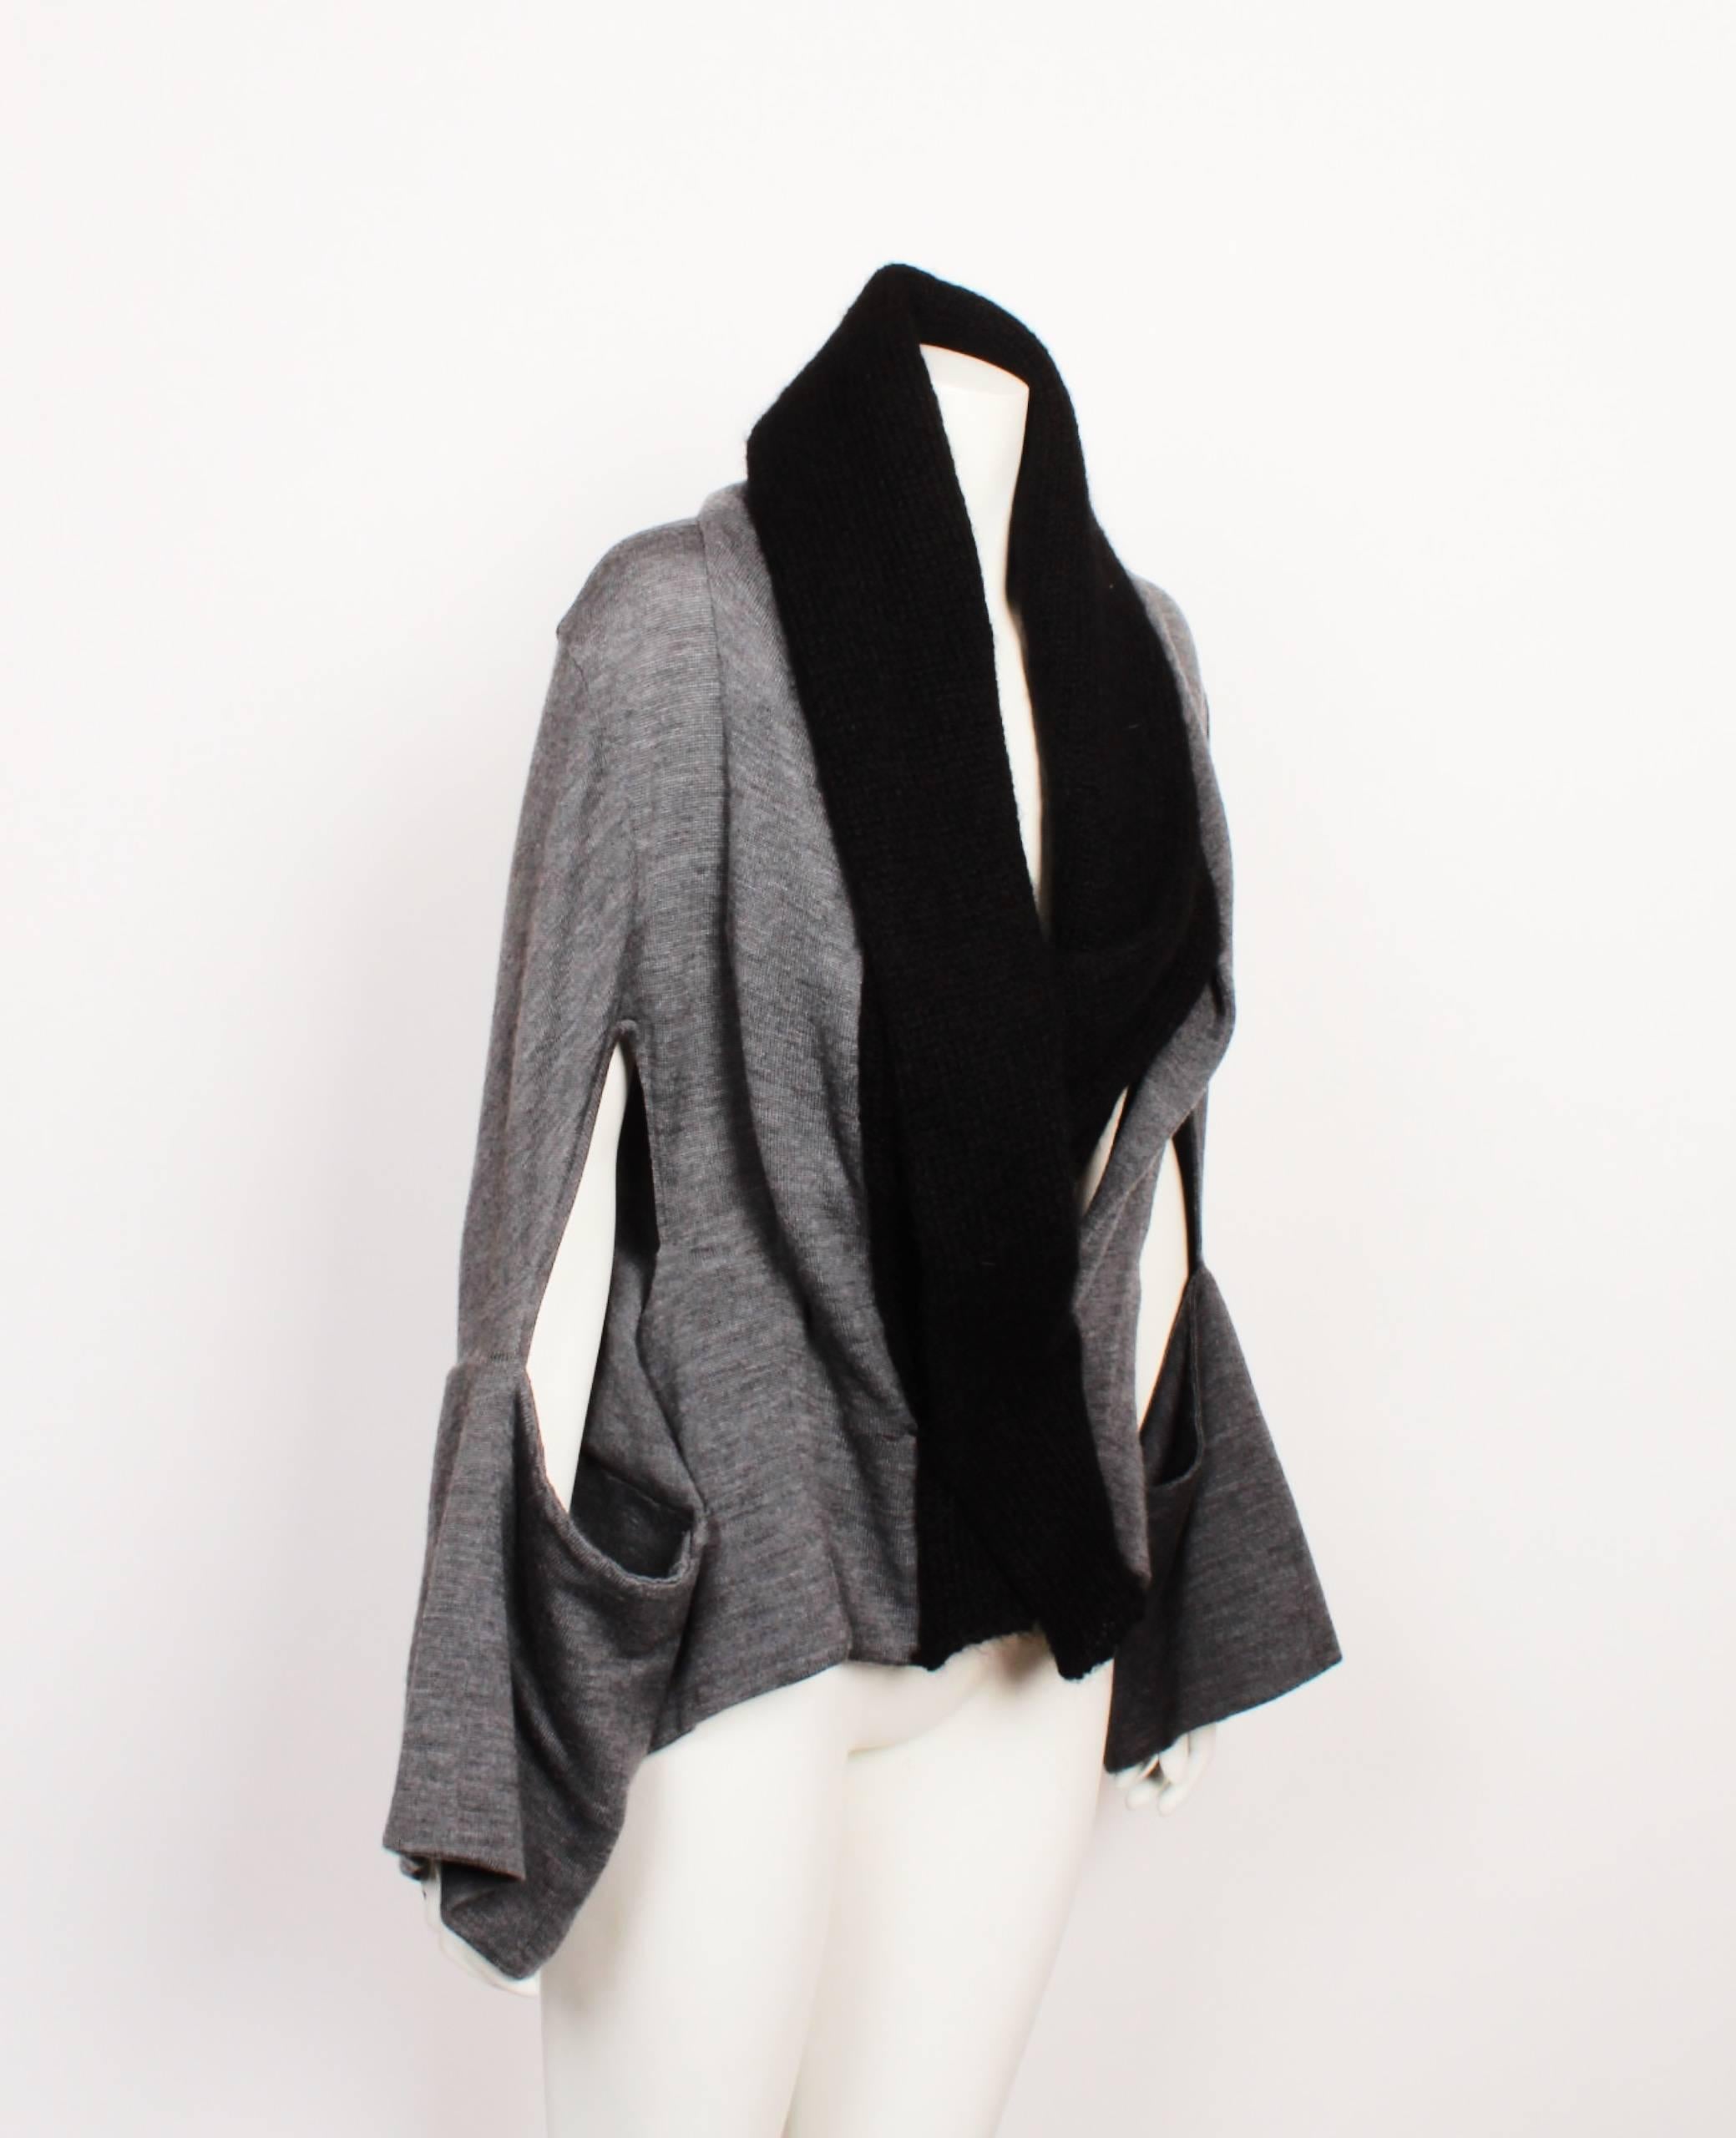 Yohji Yamamoto grey wool knit jacket. 
Deconstructed sleeves with black shawl-like front. 
Press Stud Closure & Tie wrap closure. 
